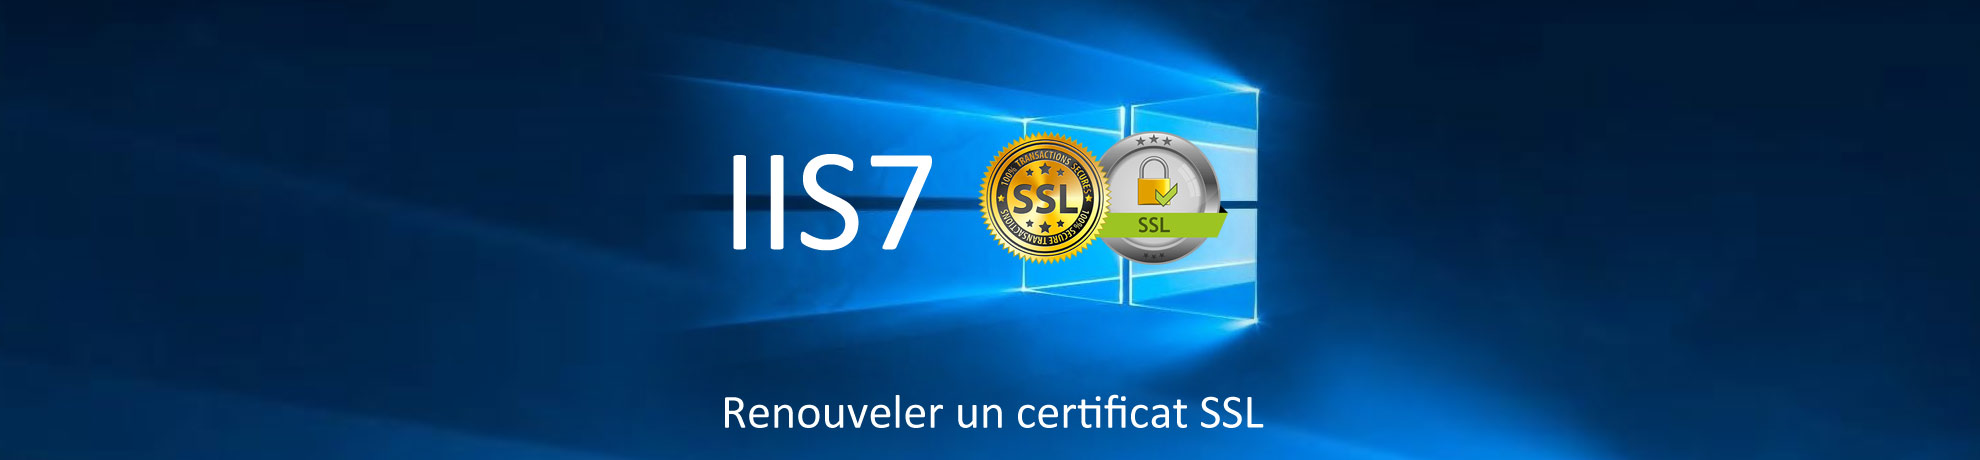 IIS7 - Renouveler un certificat SSL